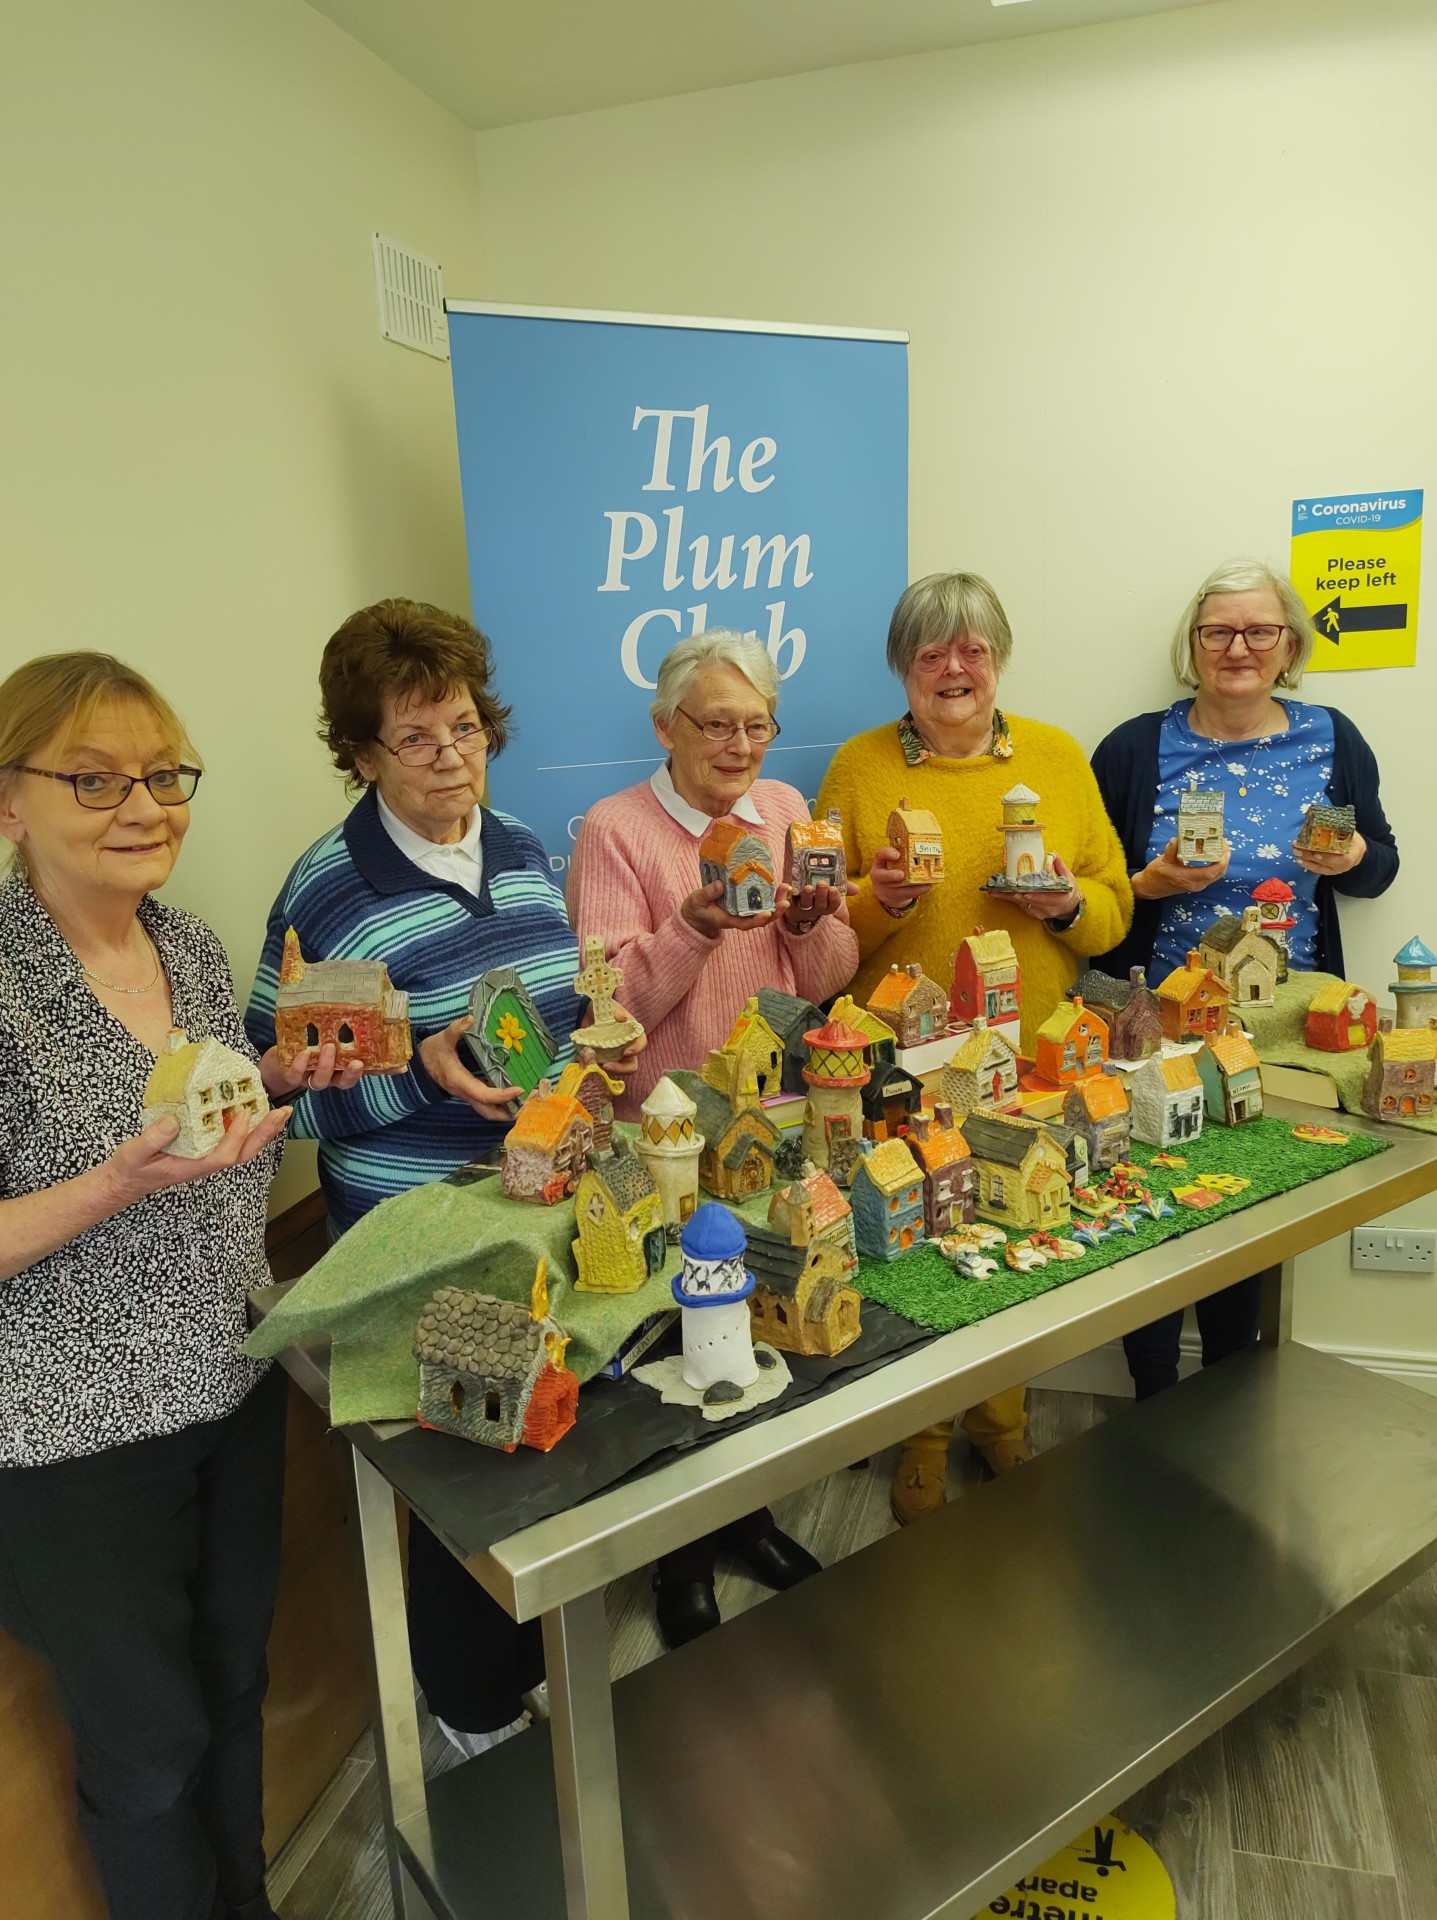 Plum Club members tell stories in clay